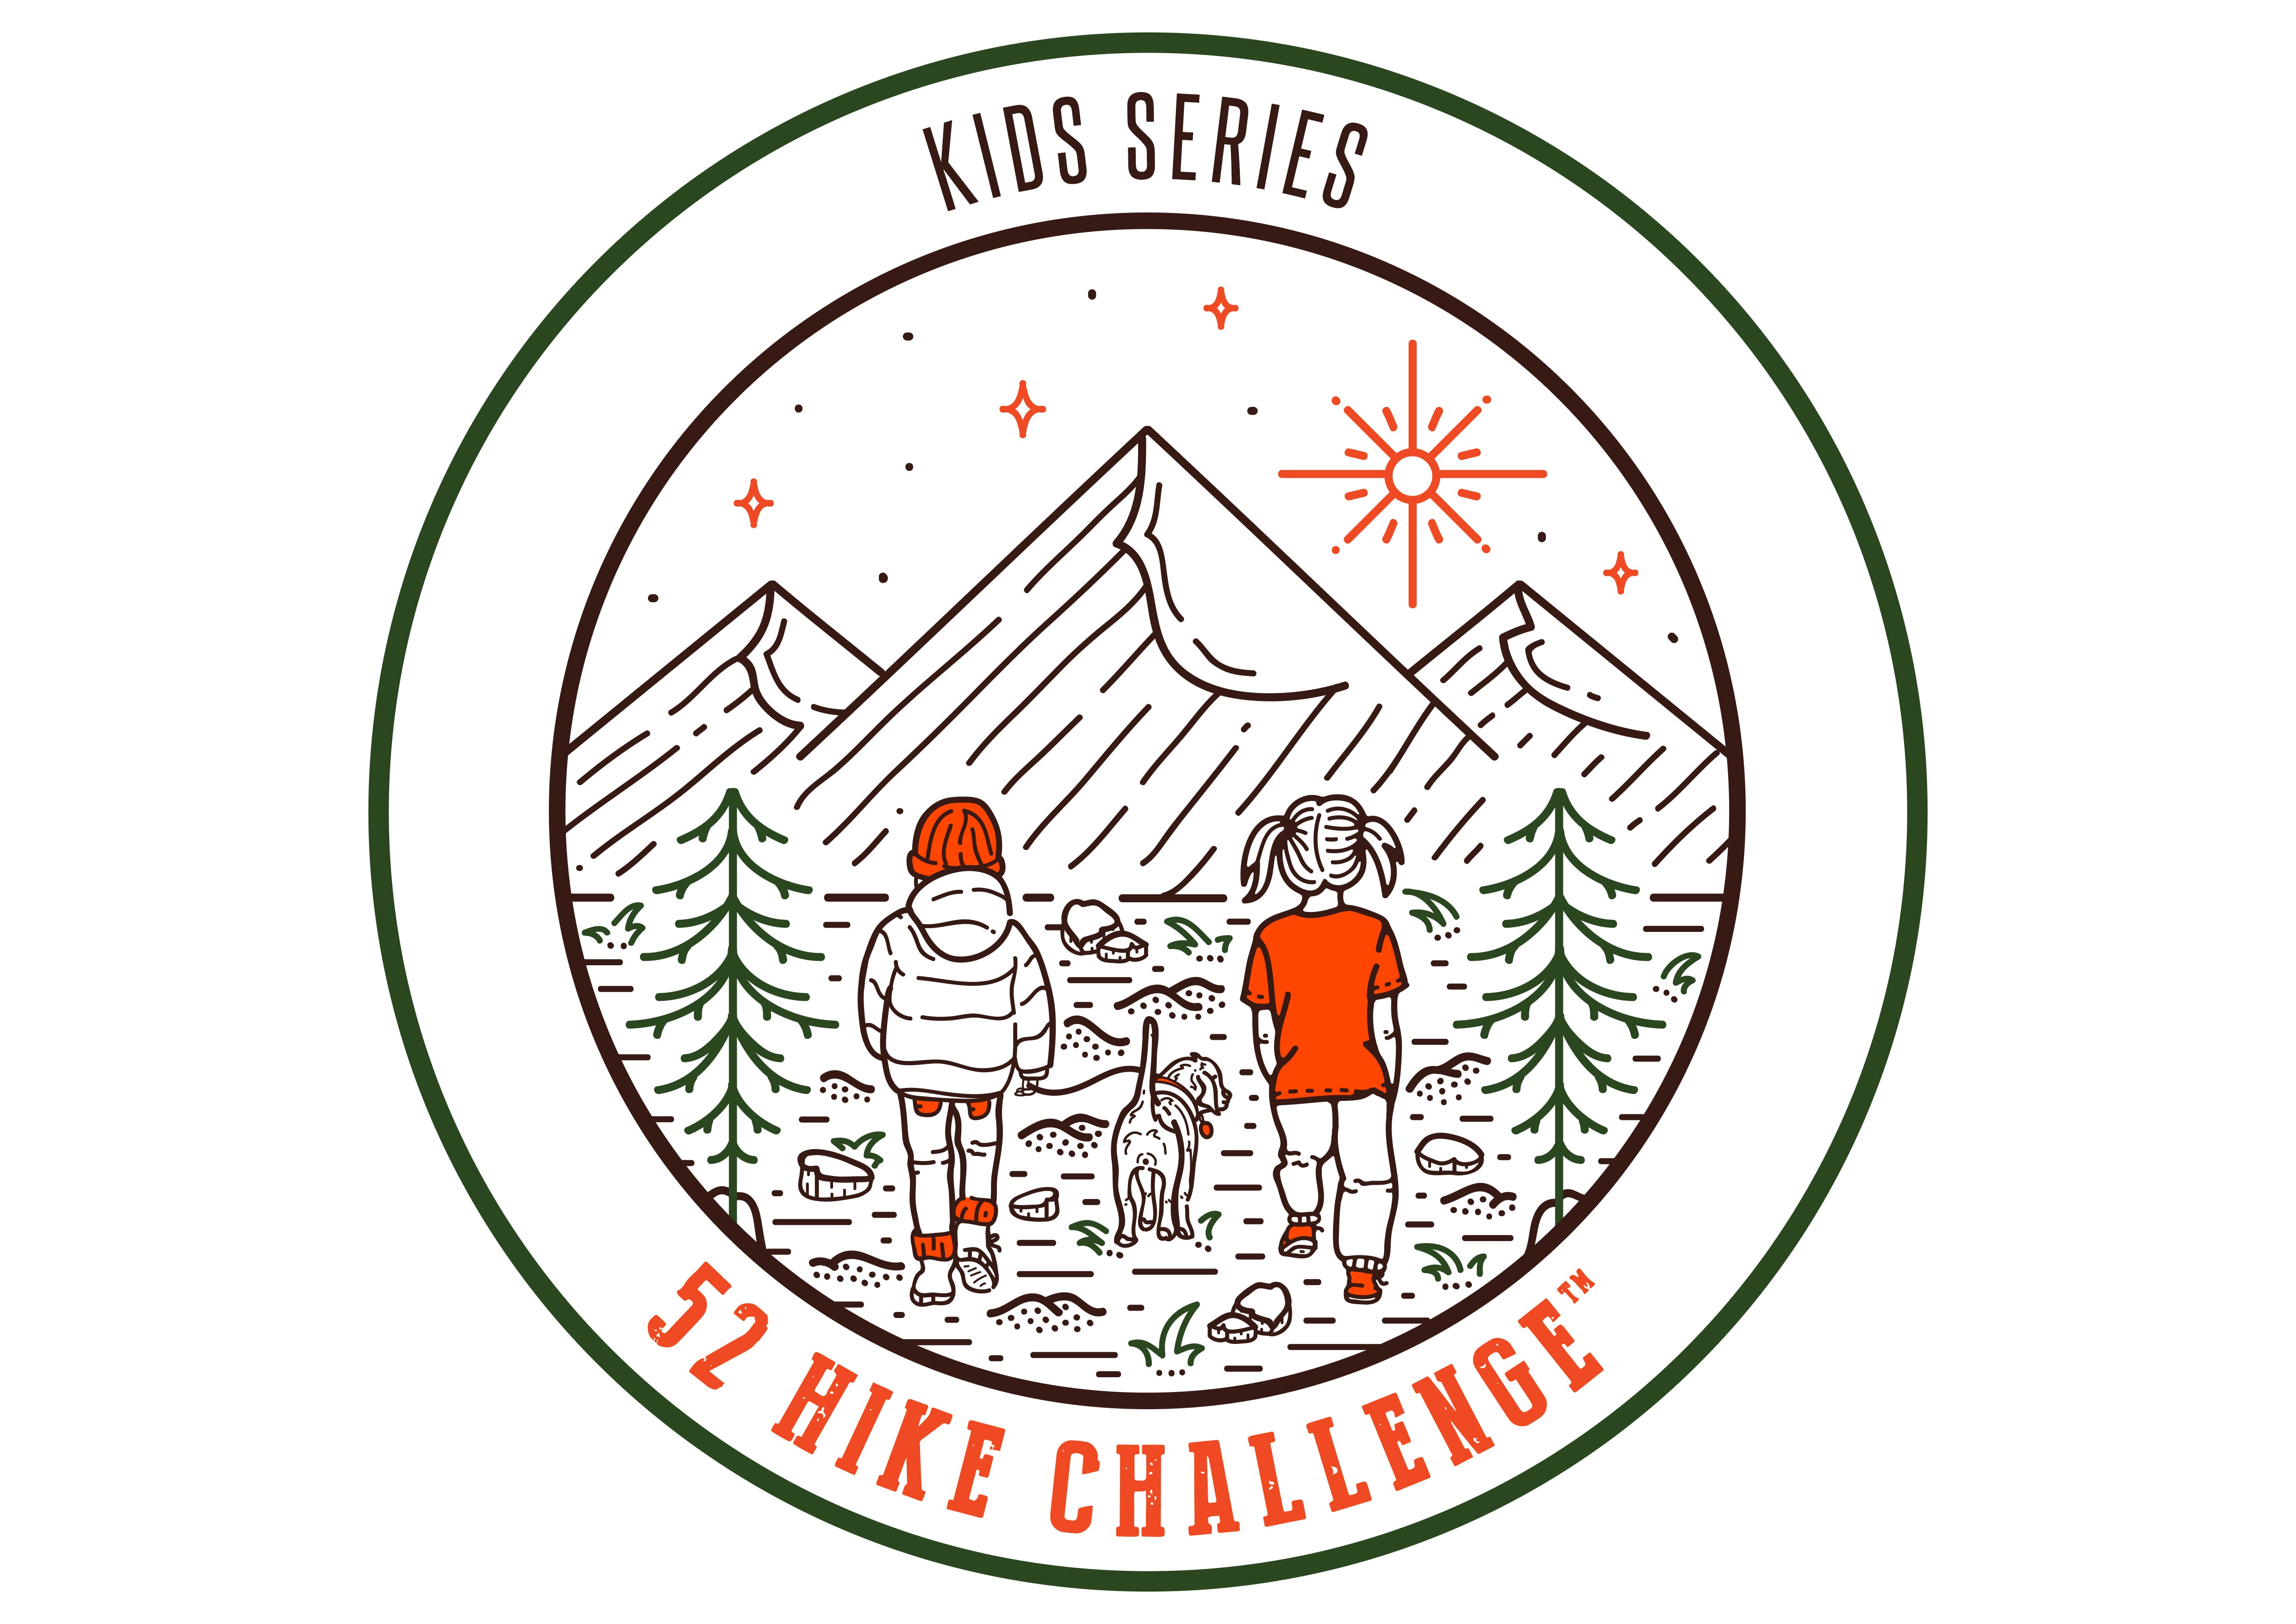 52 Hike Challenge Kids Series Stickers (2-Pack)